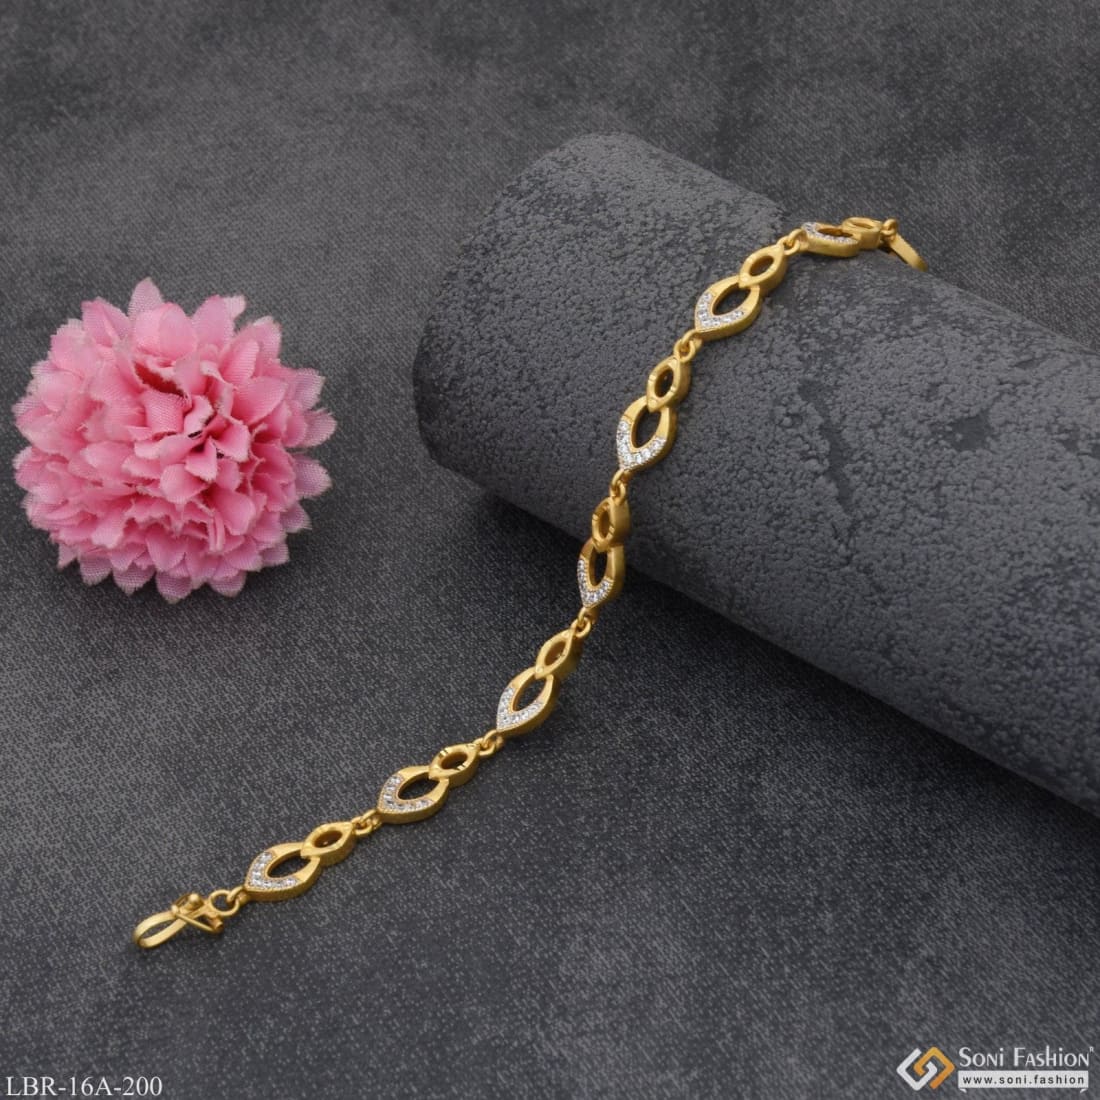 Mudra Design Bracelet in Rectangle full of Diamonds with Attractive Belt -  Style A577 | Belt style, Bracelet designs, 1 gram gold jewellery